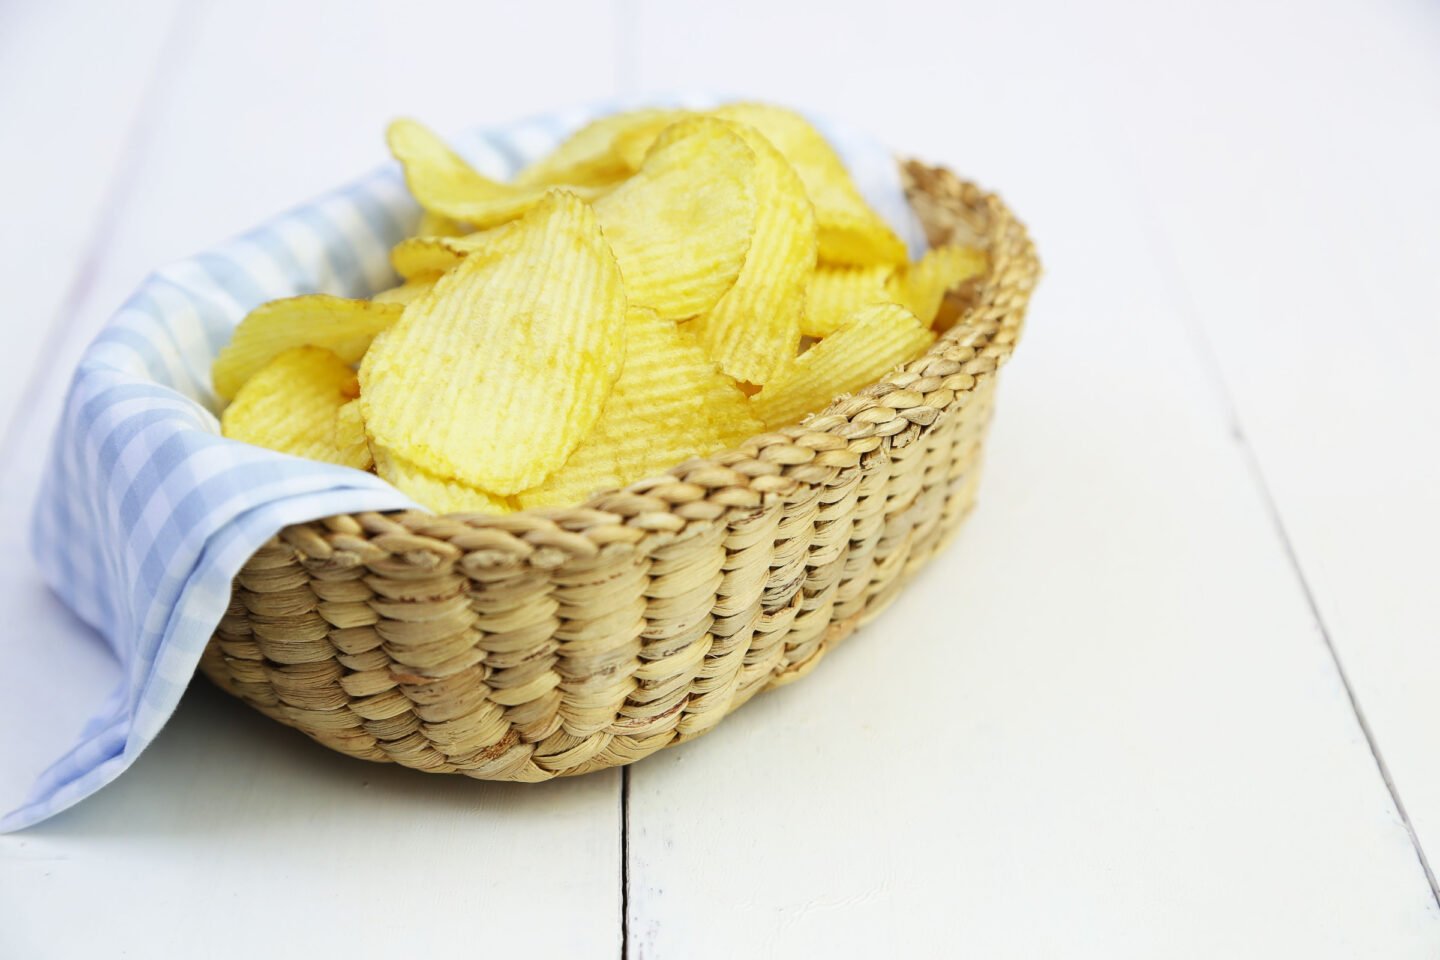 ridged potato chips in a basket